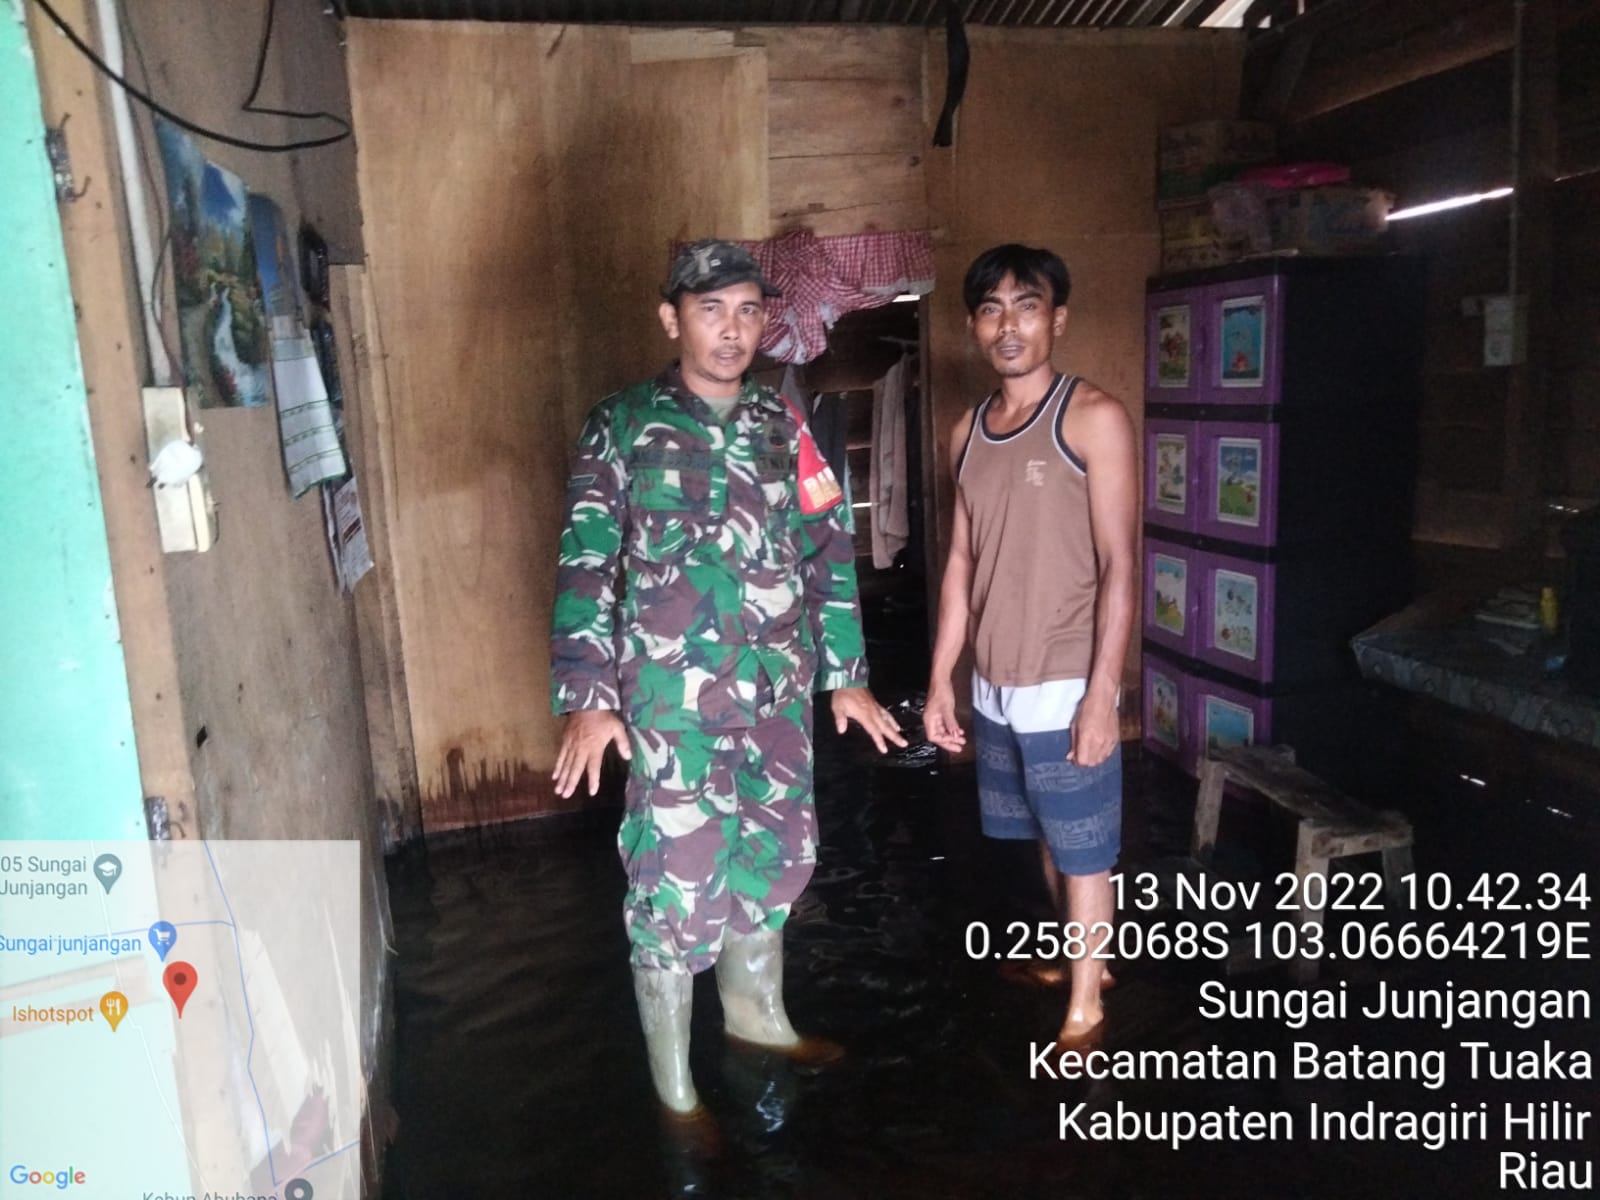 Serda Nasir Siagian Monitor Desa Banjir